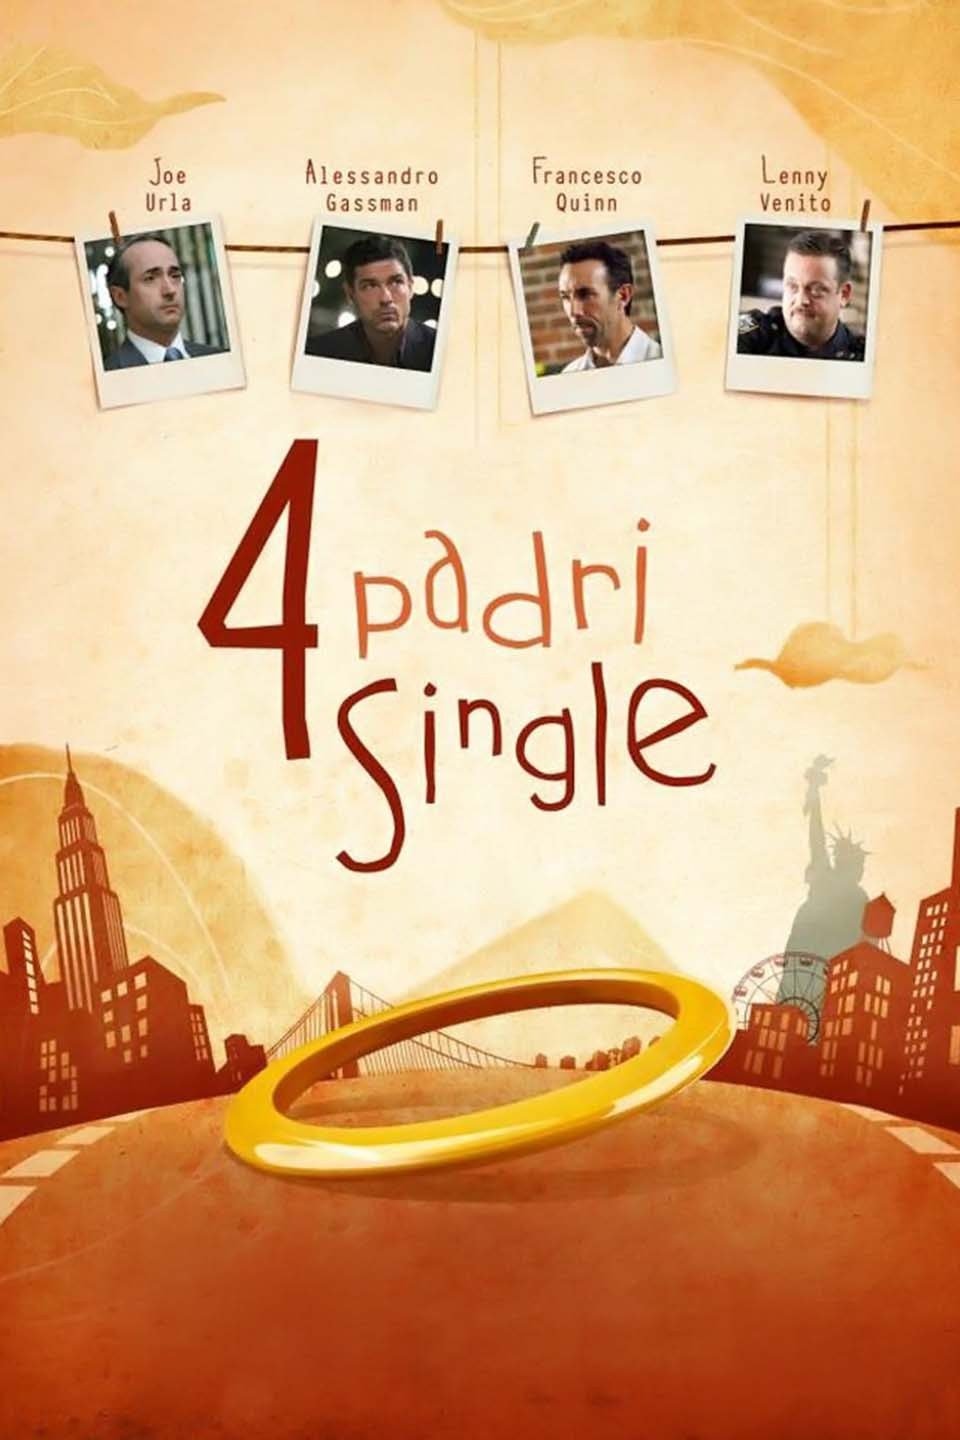 4 padri single (2008)